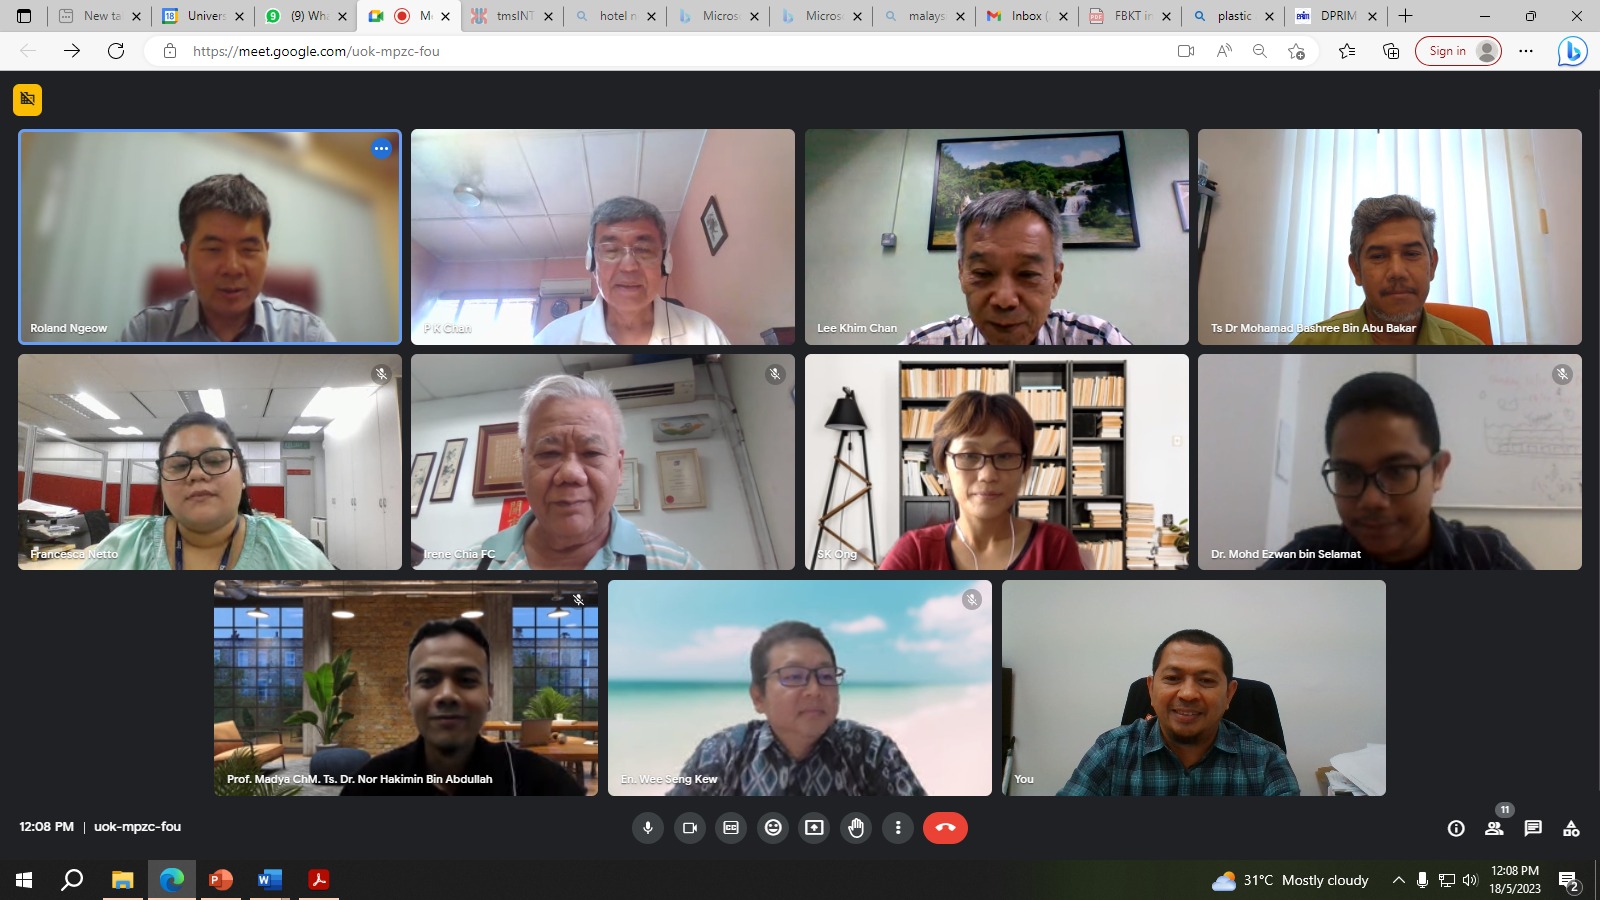 Perbincangan Kolaborasi FBKT, UMK dan Plastic and Rubber Institute Malaysia 